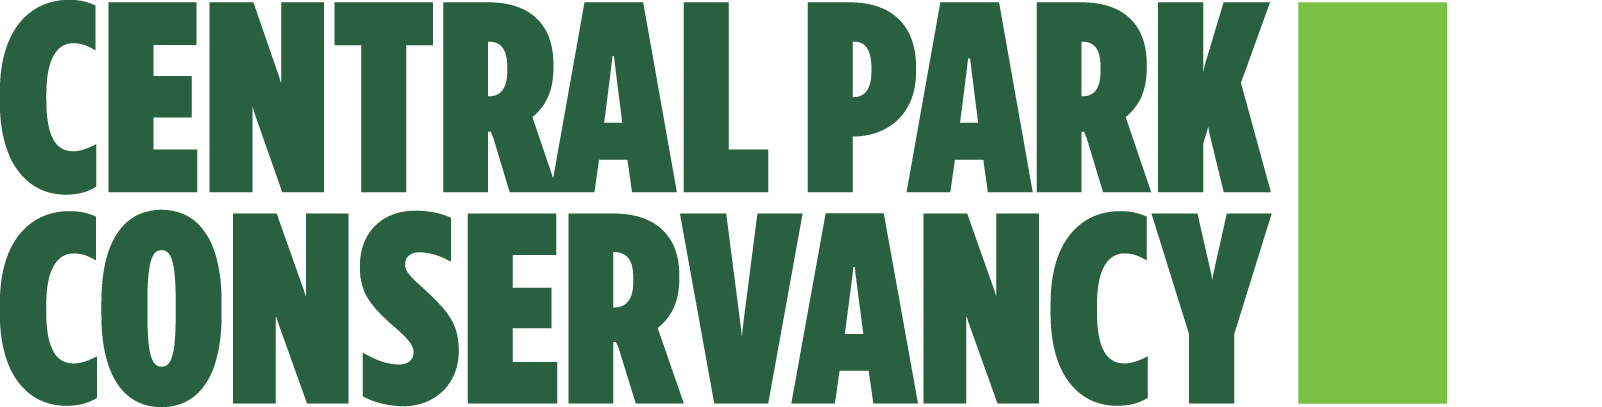 Central Park Conservancy Logo